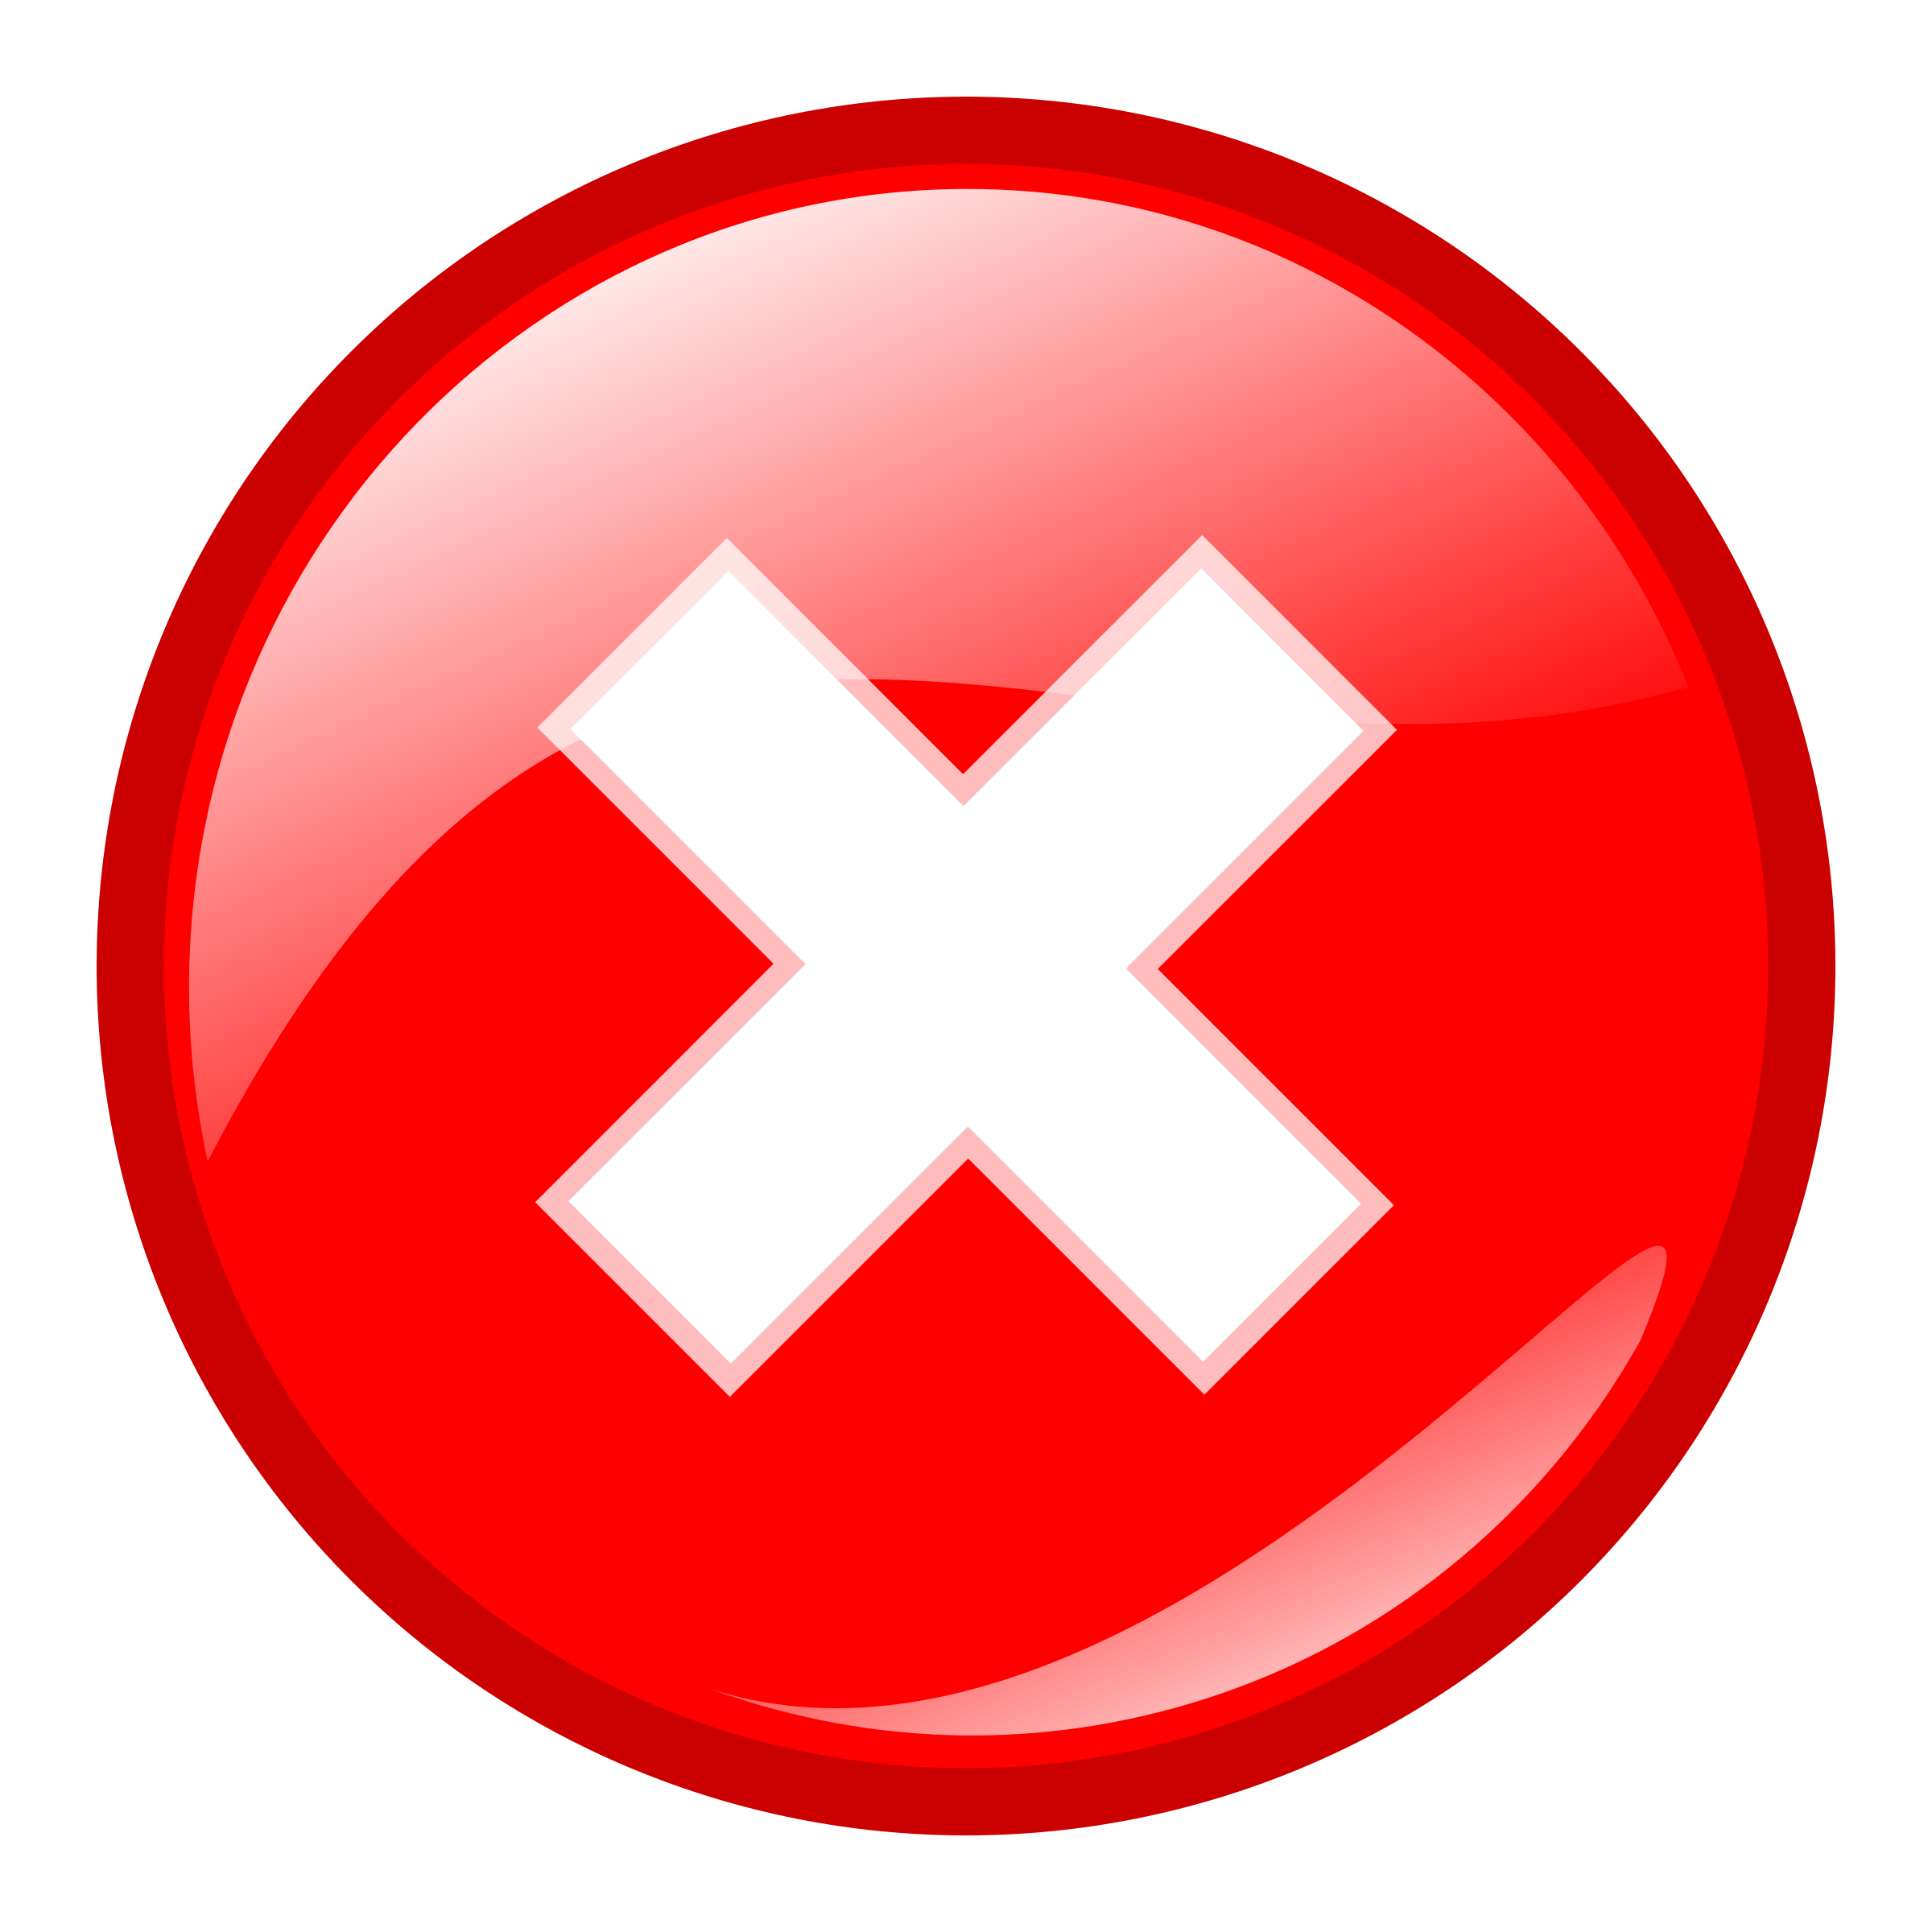 molumen-red-round-error-warning-icon.png